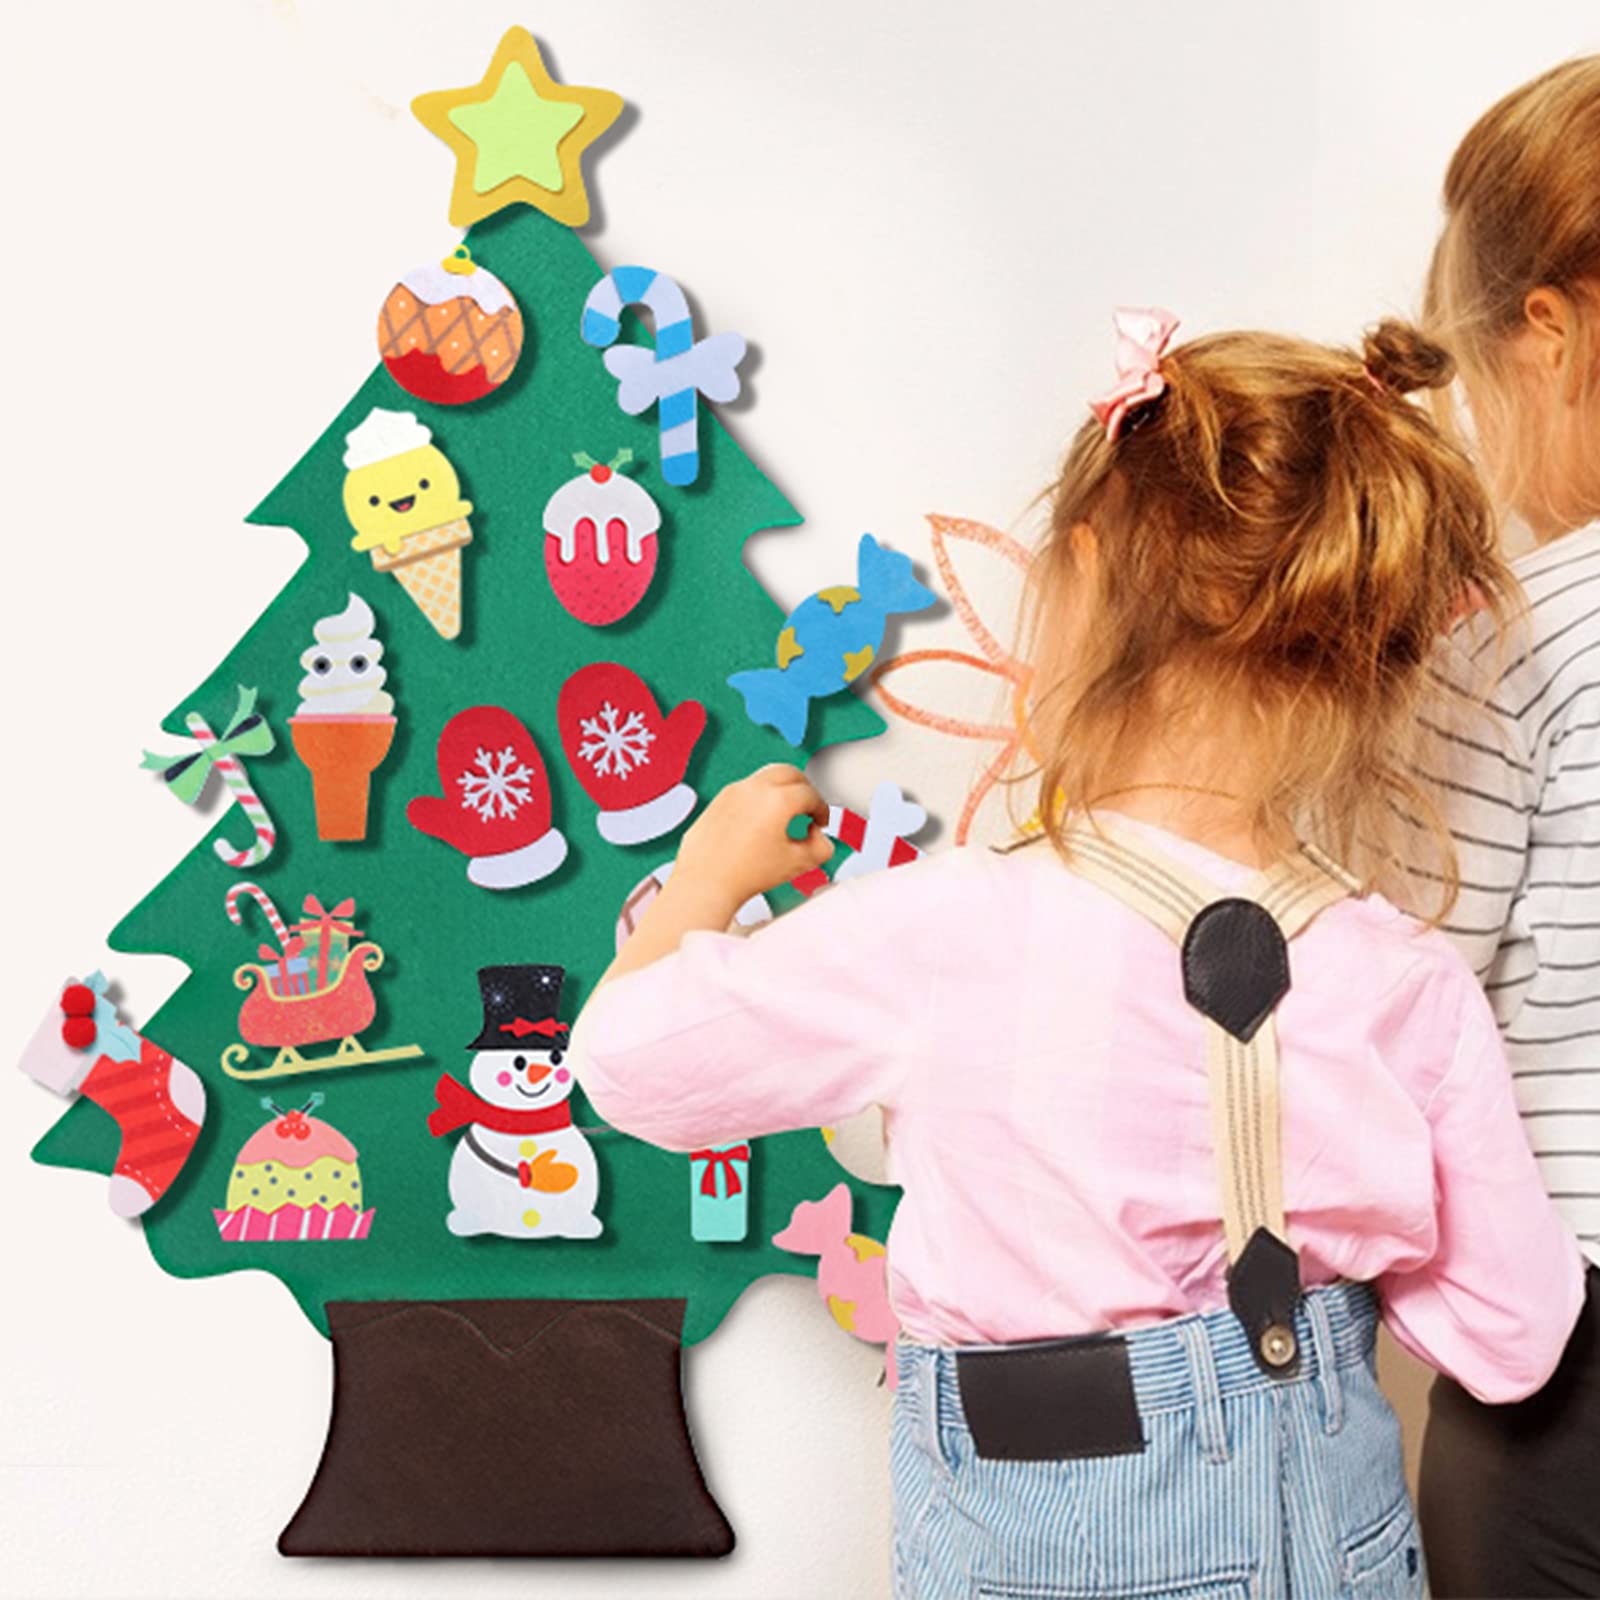 Felt Christmas Tree - 3.5 FT DIY Felt Christmas Tree Set, 38 Ornaments, Xmas Decorations New Year Door Wall Hanging Decorations, Great Gift for Kids